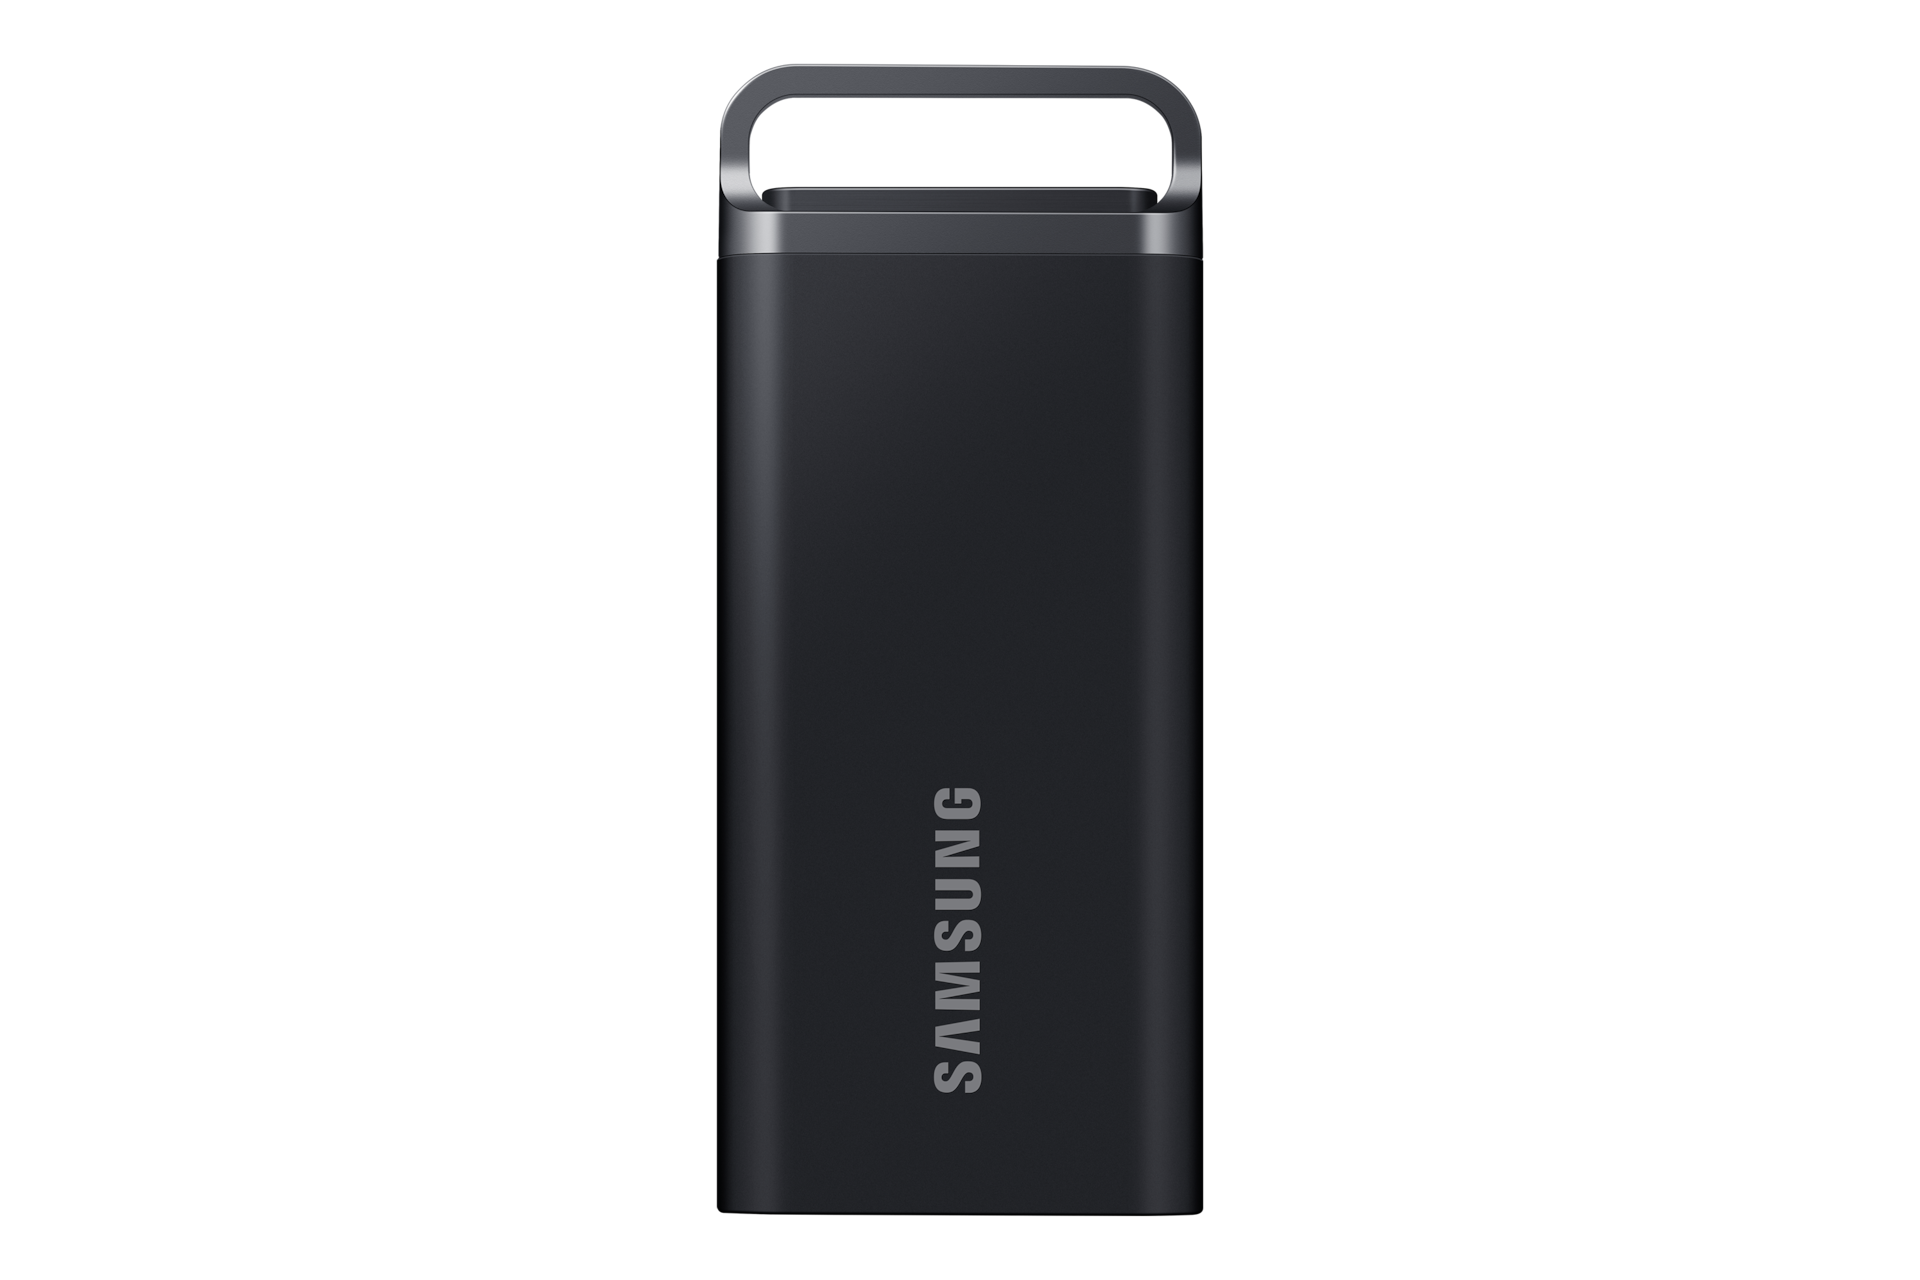 Samsung T9 4 To - Disque dur et SSD externe - Top Achat